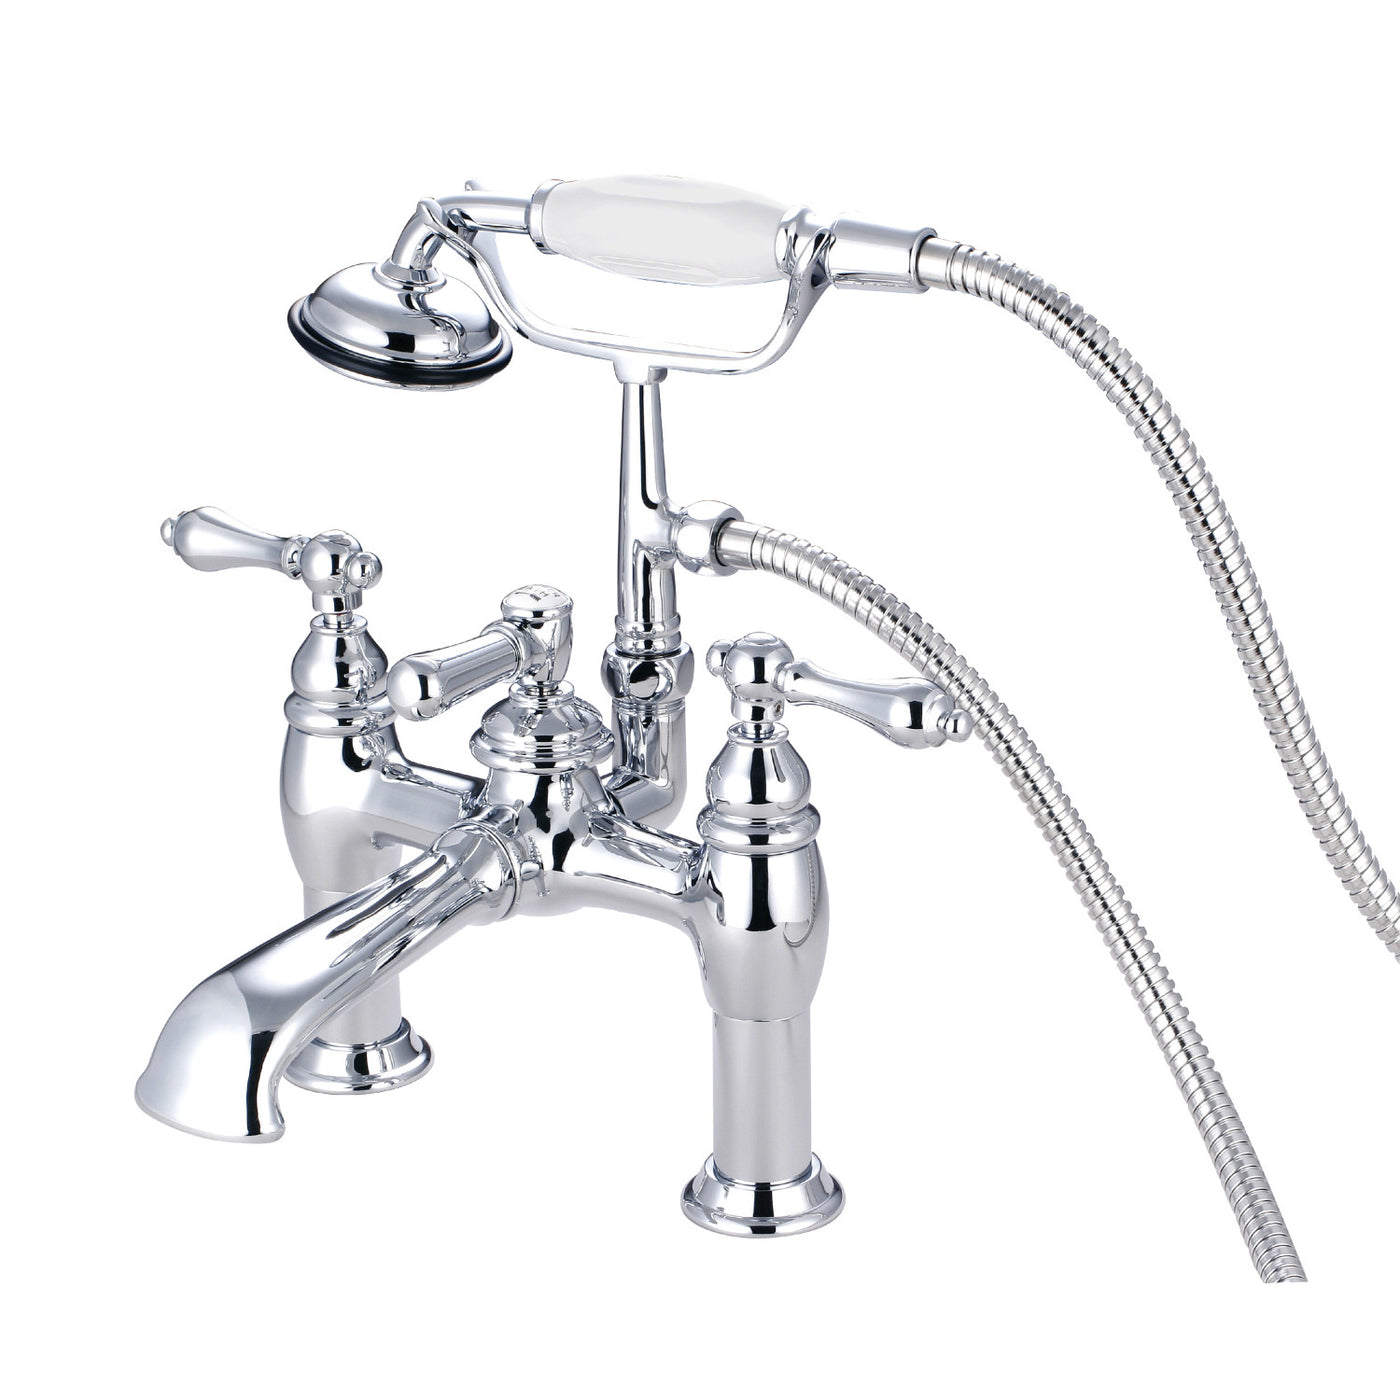 Elements of Design DT6041AL 7-Inch Deck Mount Tub Faucet with Hand Shower, Polished Chrome